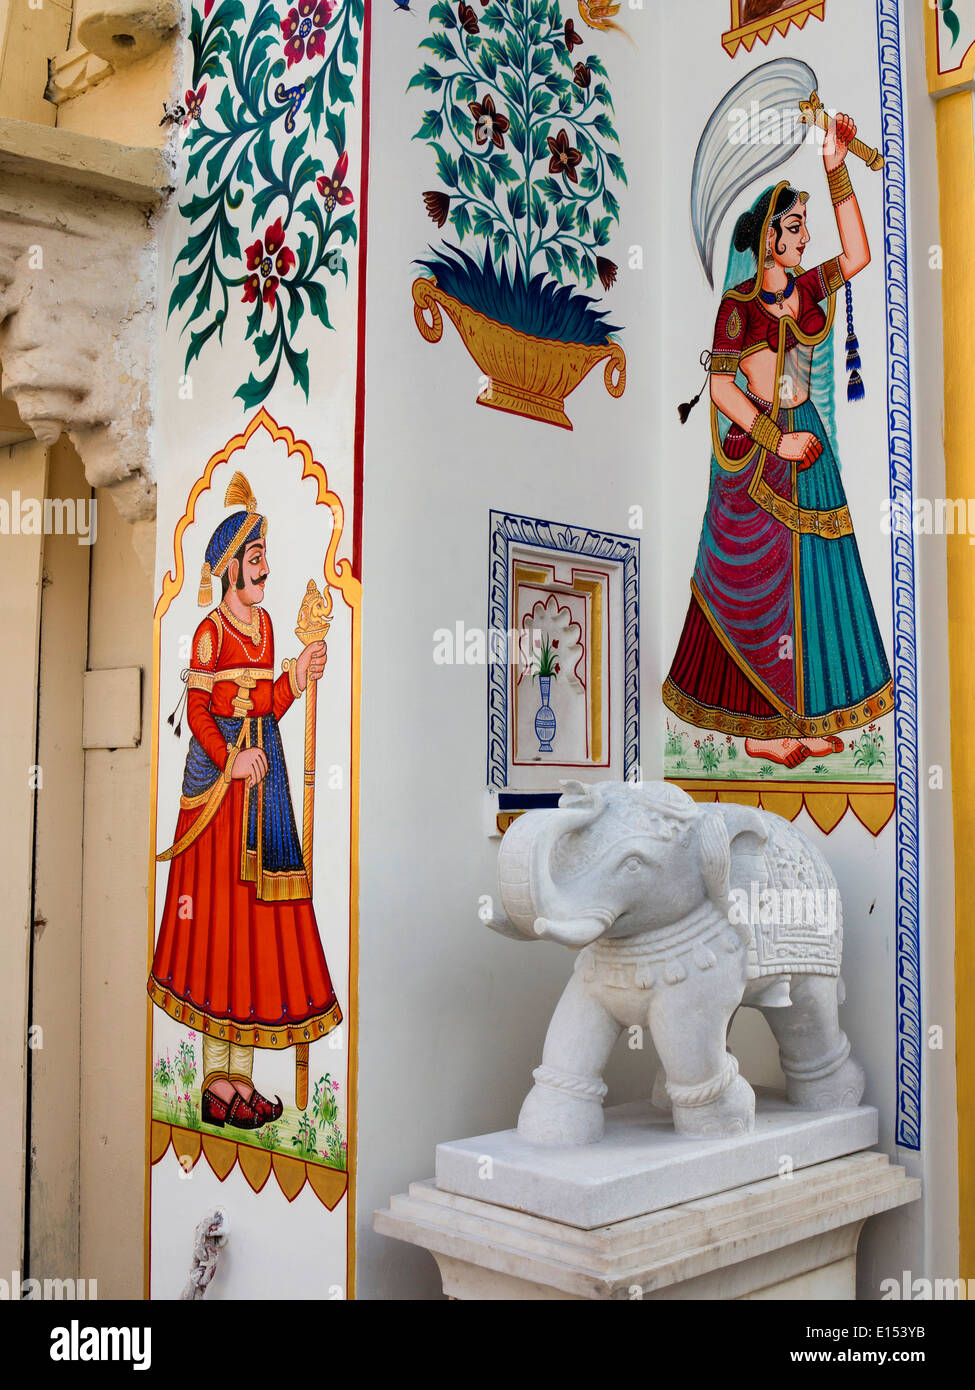 India, Rajasthan, Udaipur, City Palace, high quality traditional Rajasthani Folk Art, wall paintings Stock Photo